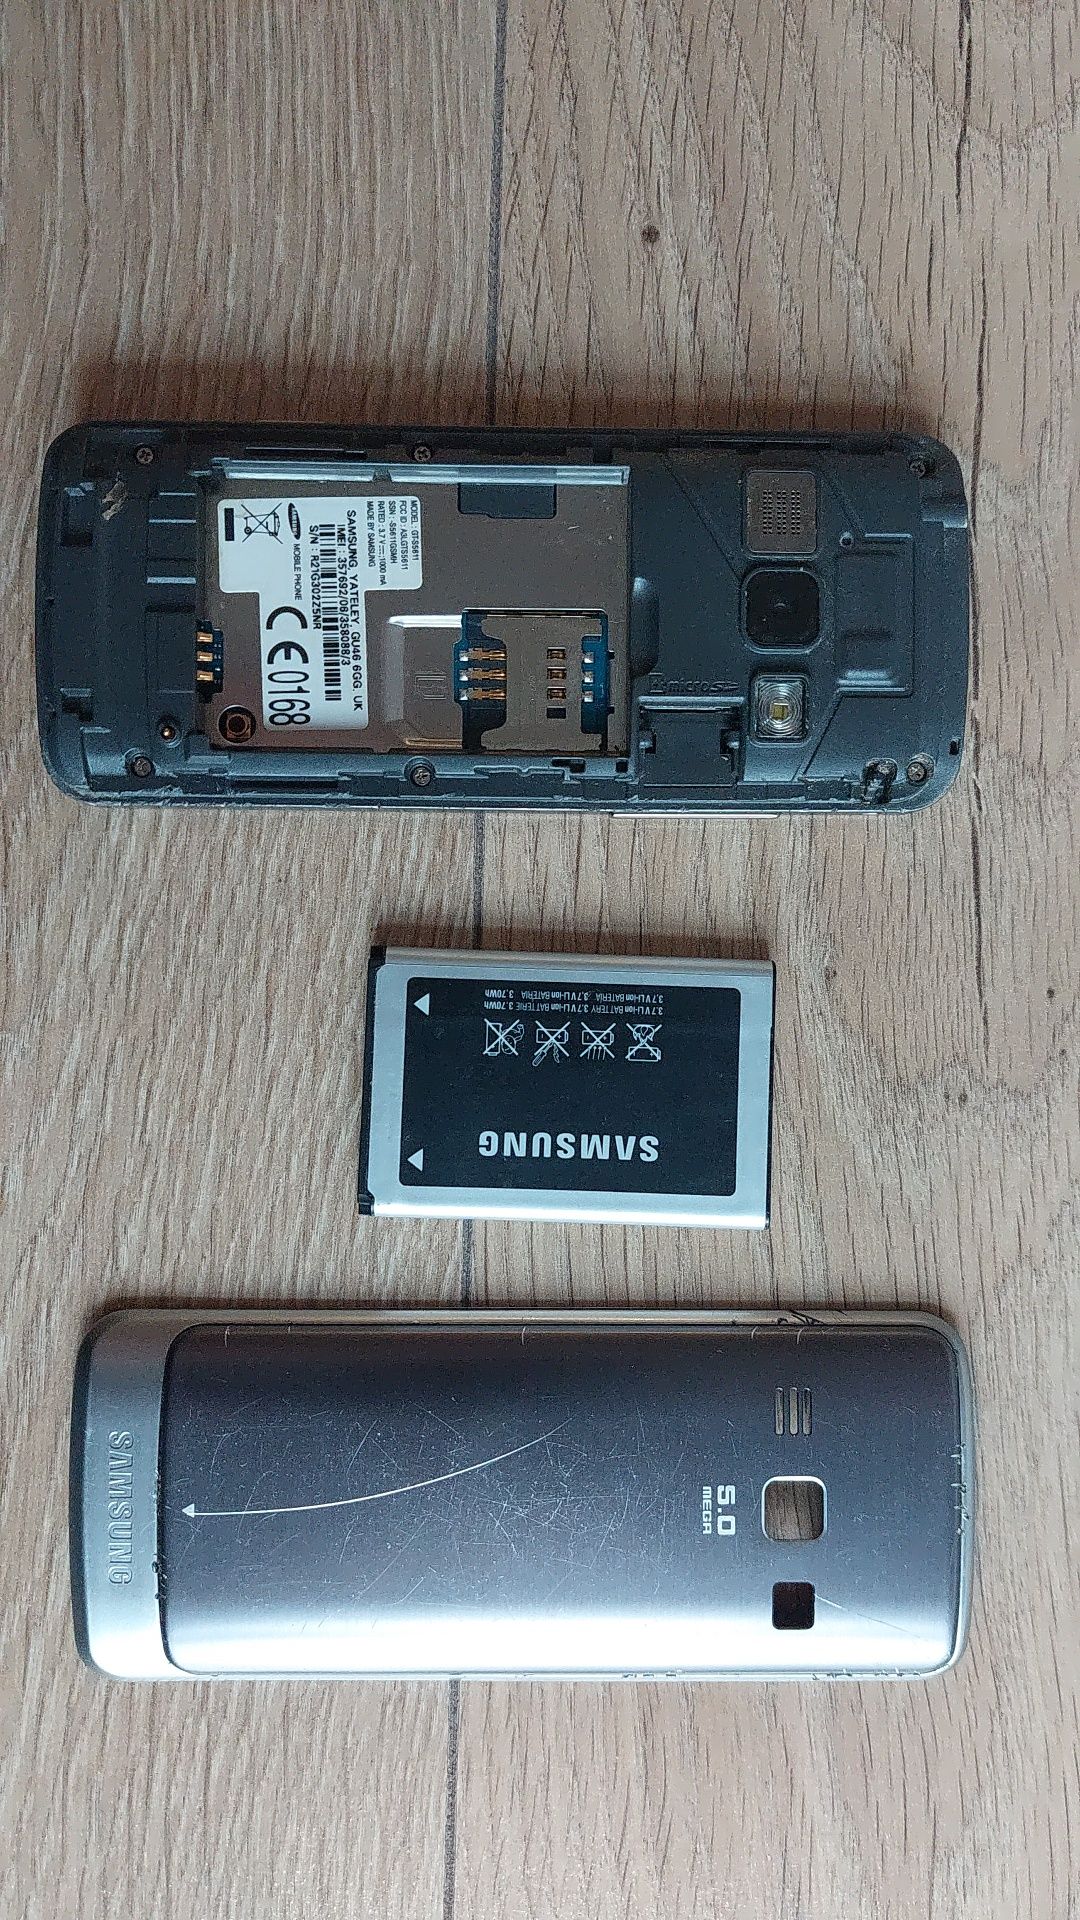 Kolekcjonerski Samsung S5611 bez simloka